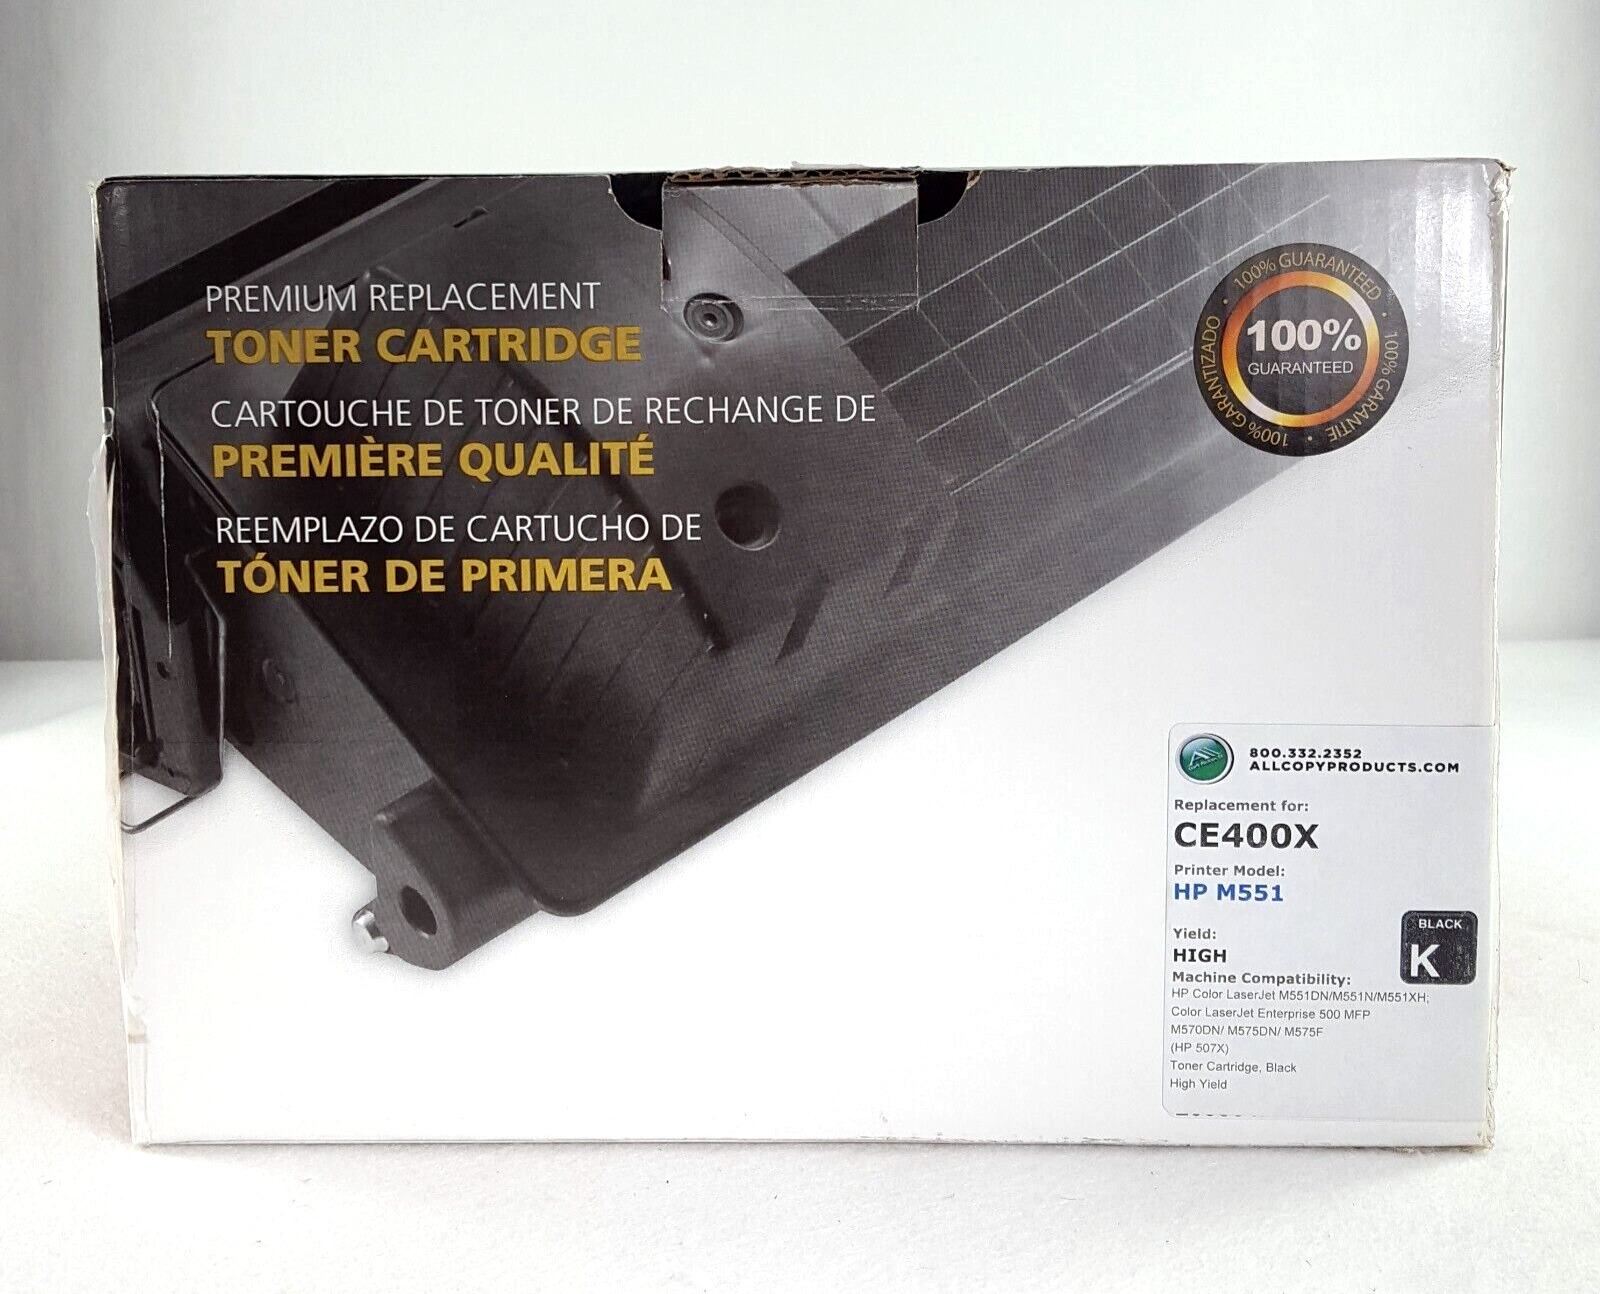 Premium Black Toner Cartridge HP M551 CE400X High Yield Factory Sealed